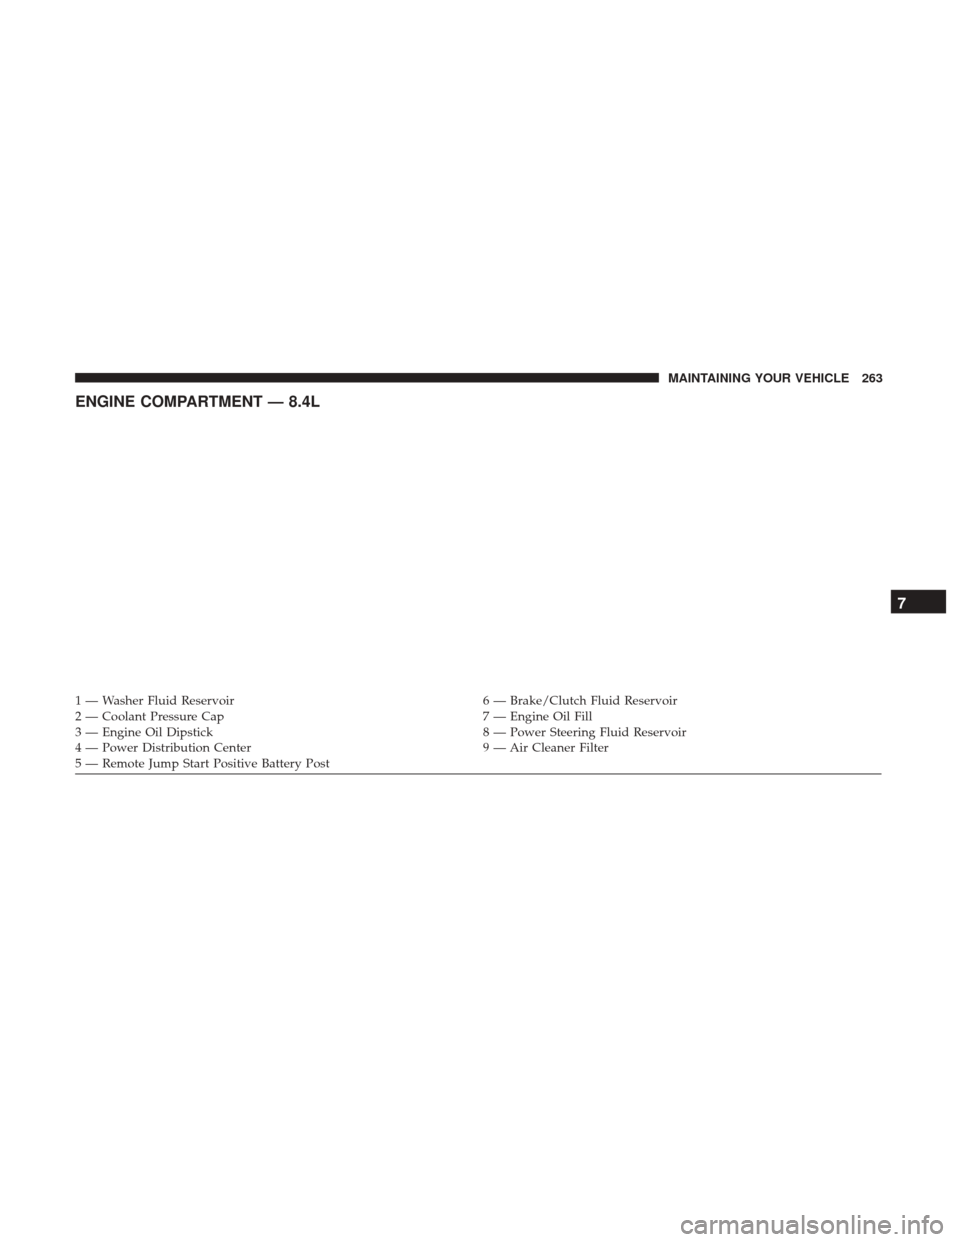 DODGE VIPER 2017 VX / 3.G Owners Manual ENGINE COMPARTMENT — 8.4L
1 — Washer Fluid Reservoir6 — Brake/Clutch Fluid Reservoir
2 — Coolant Pressure Cap 7 — Engine Oil Fill
3 — Engine Oil Dipstick 8 — Power Steering Fluid Reservo